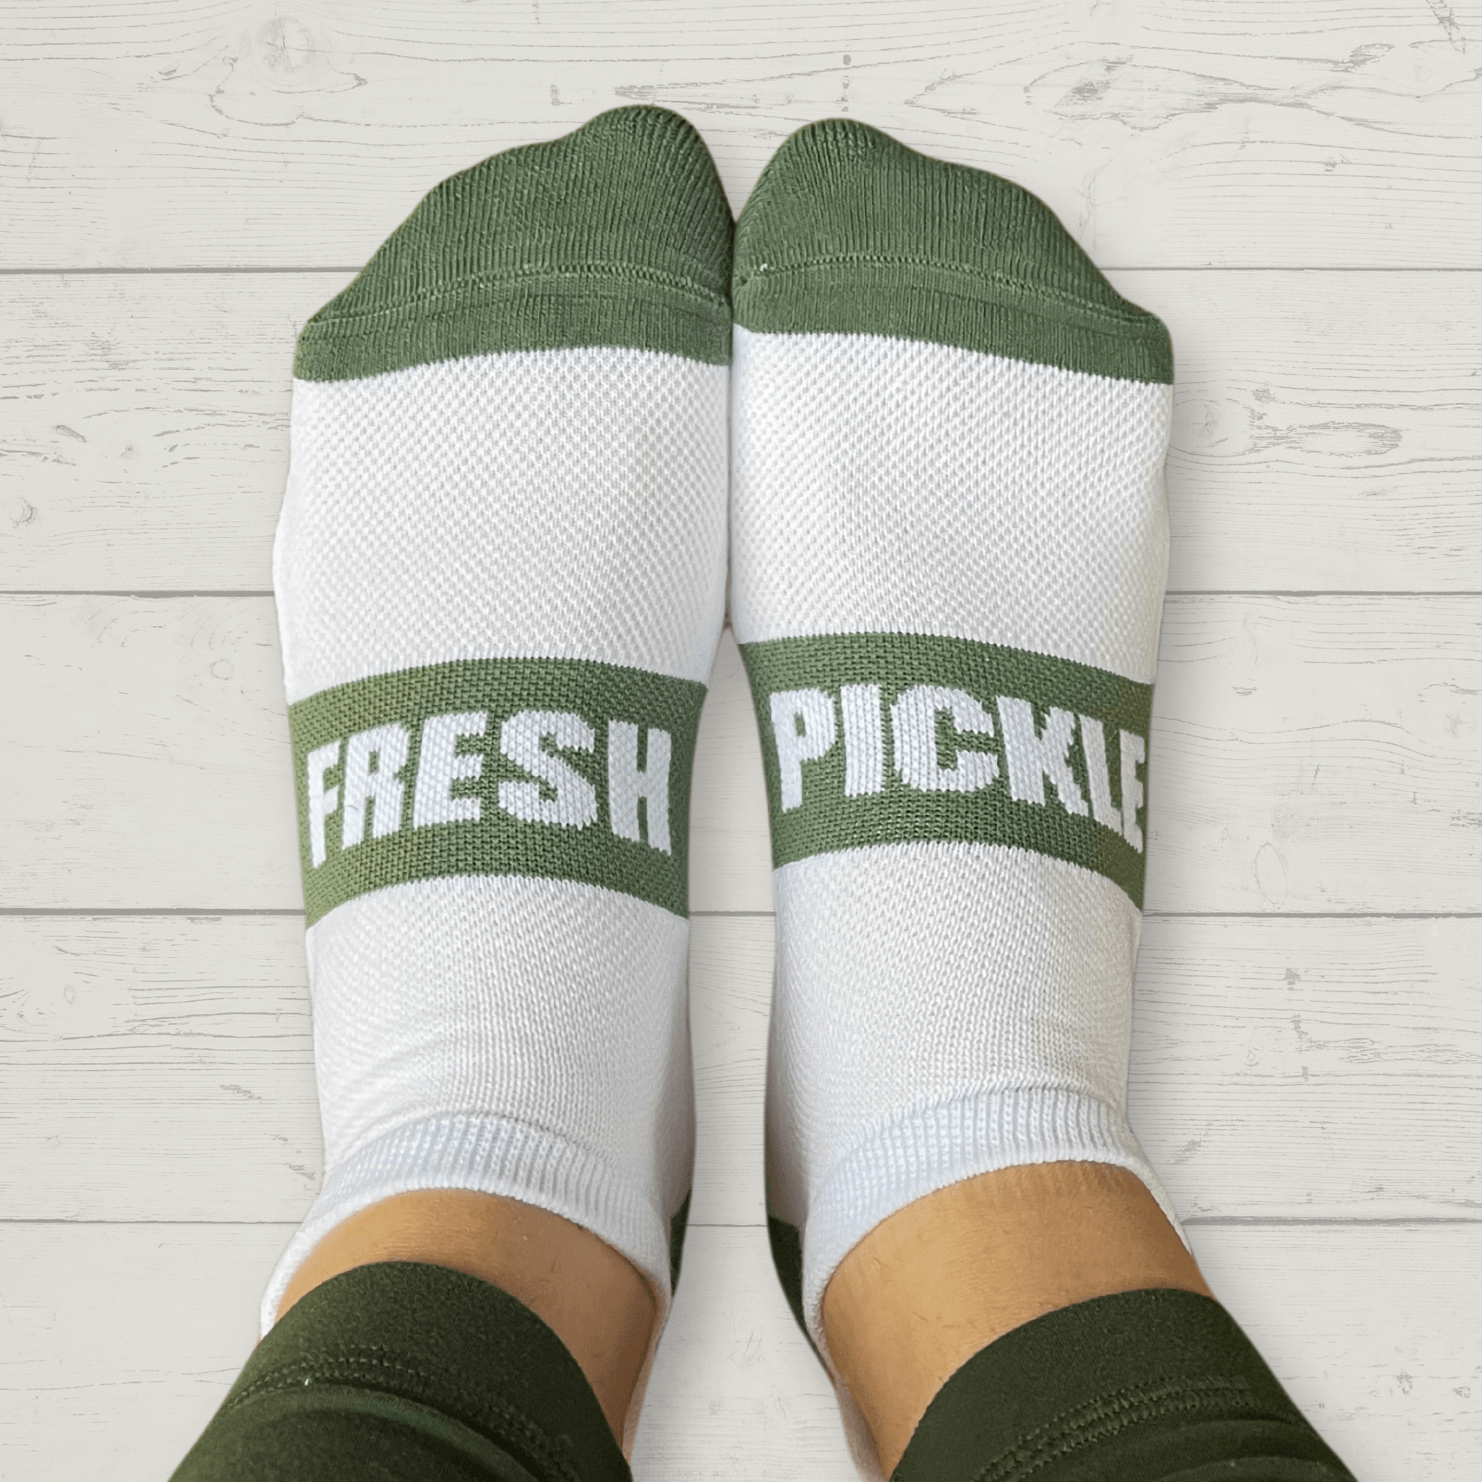 Fresh Pickle Socks - Fresh Pickle Designs